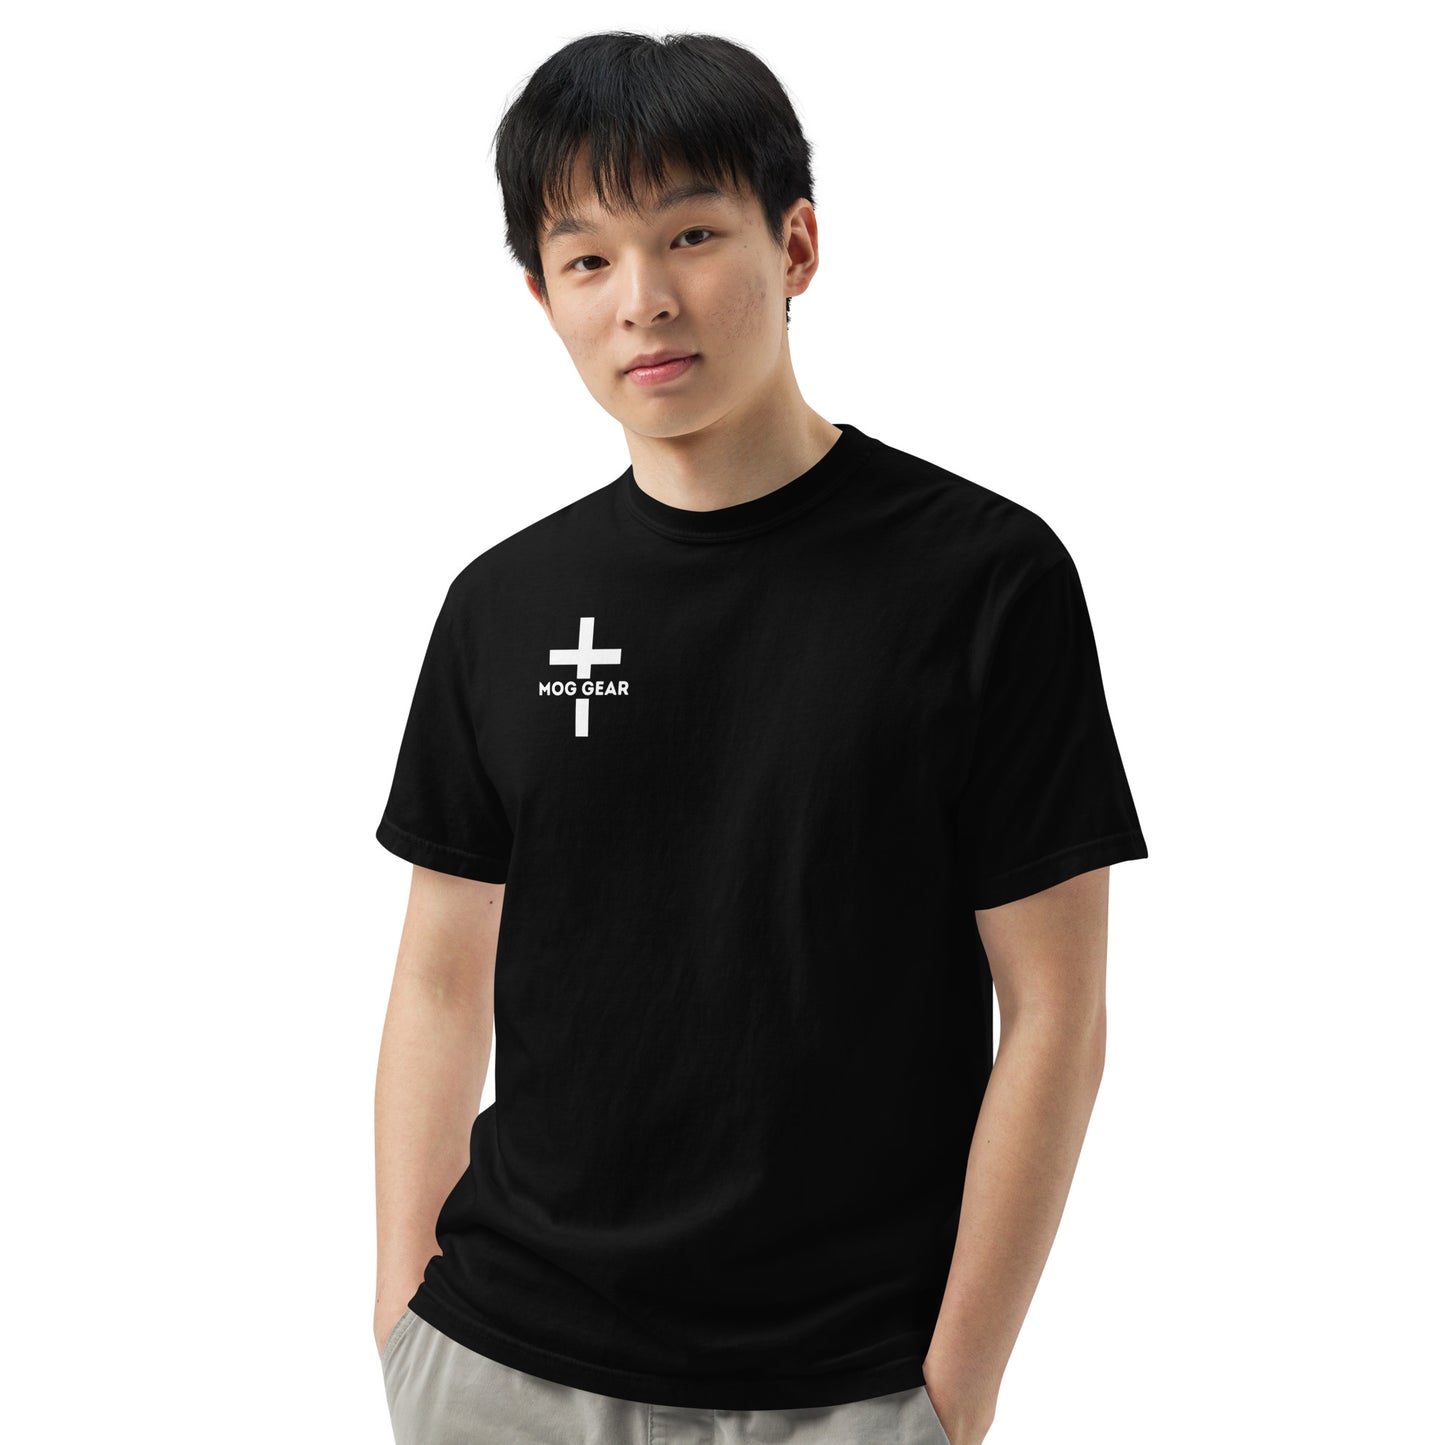 He is Risen T-shirt